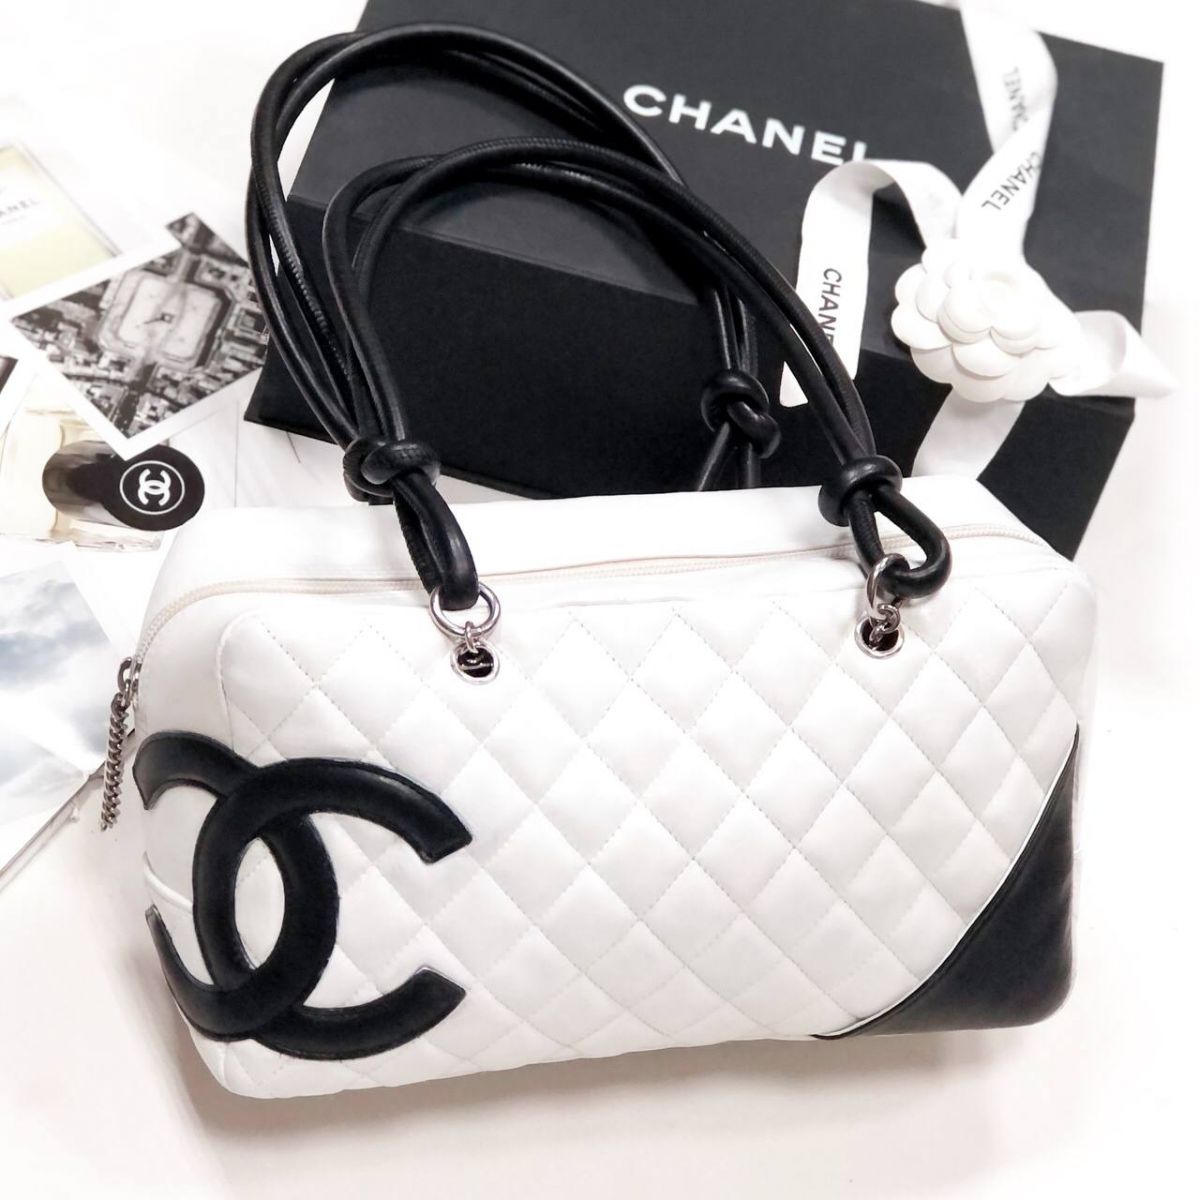 Сумка Chanel размер 28/15 цена 61 540 руб